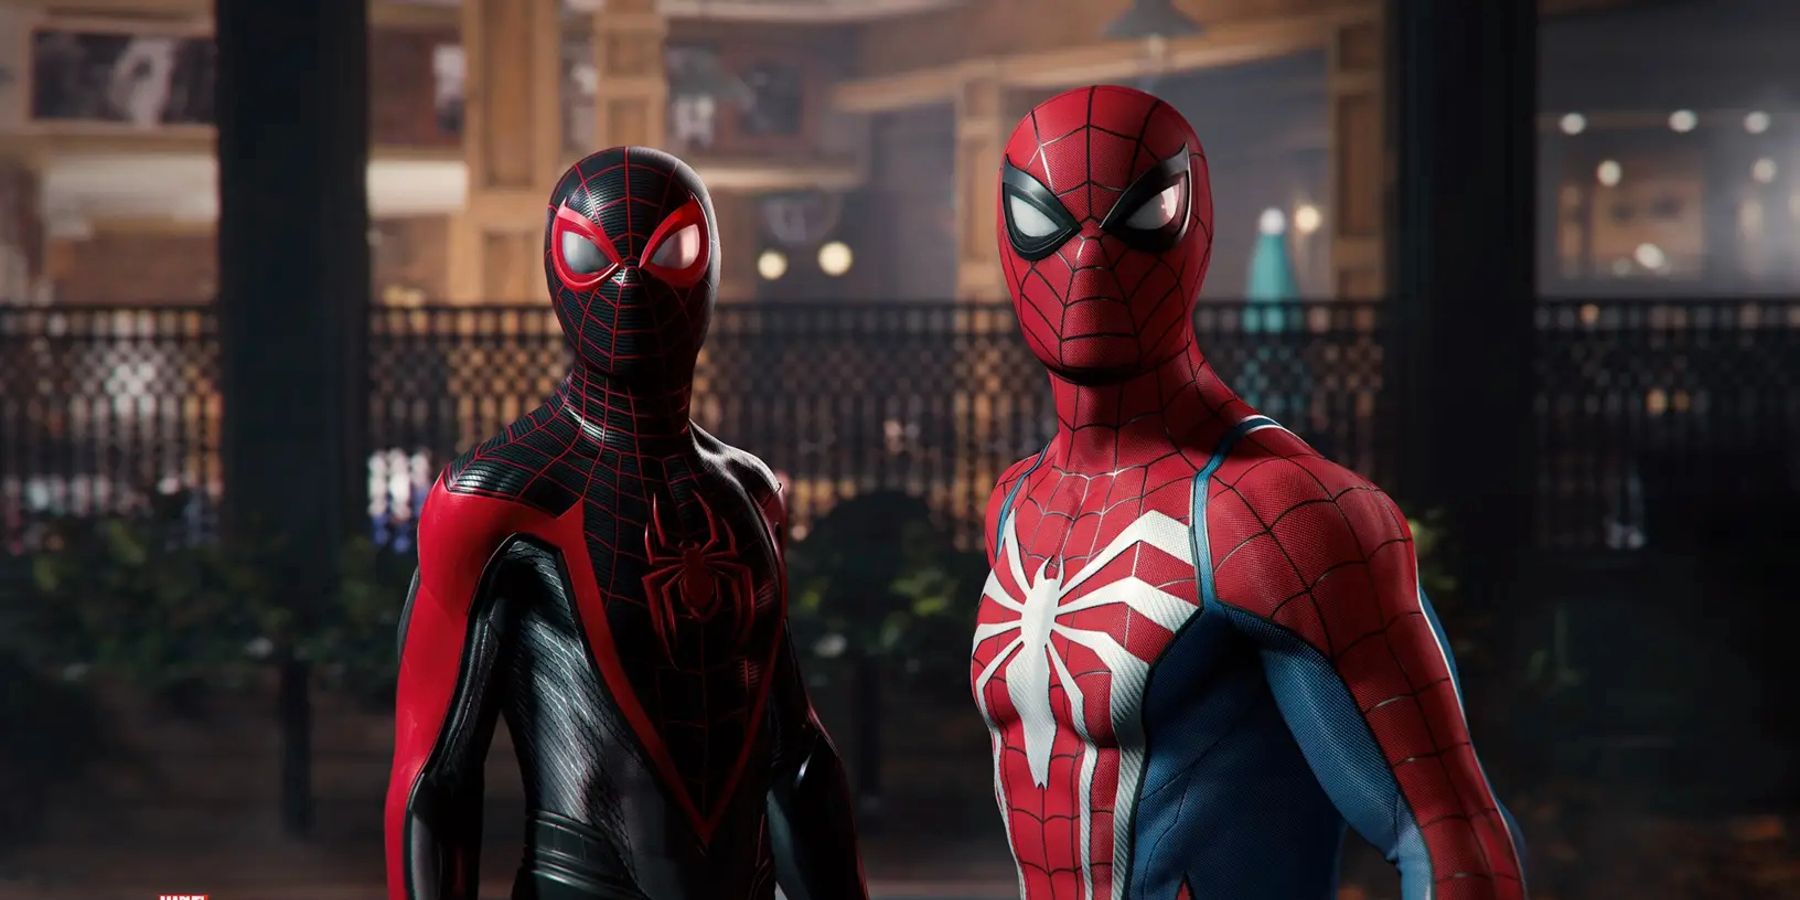 Leaker მინიშნებები At Marvel Multiplayer თამაში, შესაძლო PS5 ექსკლუზიური